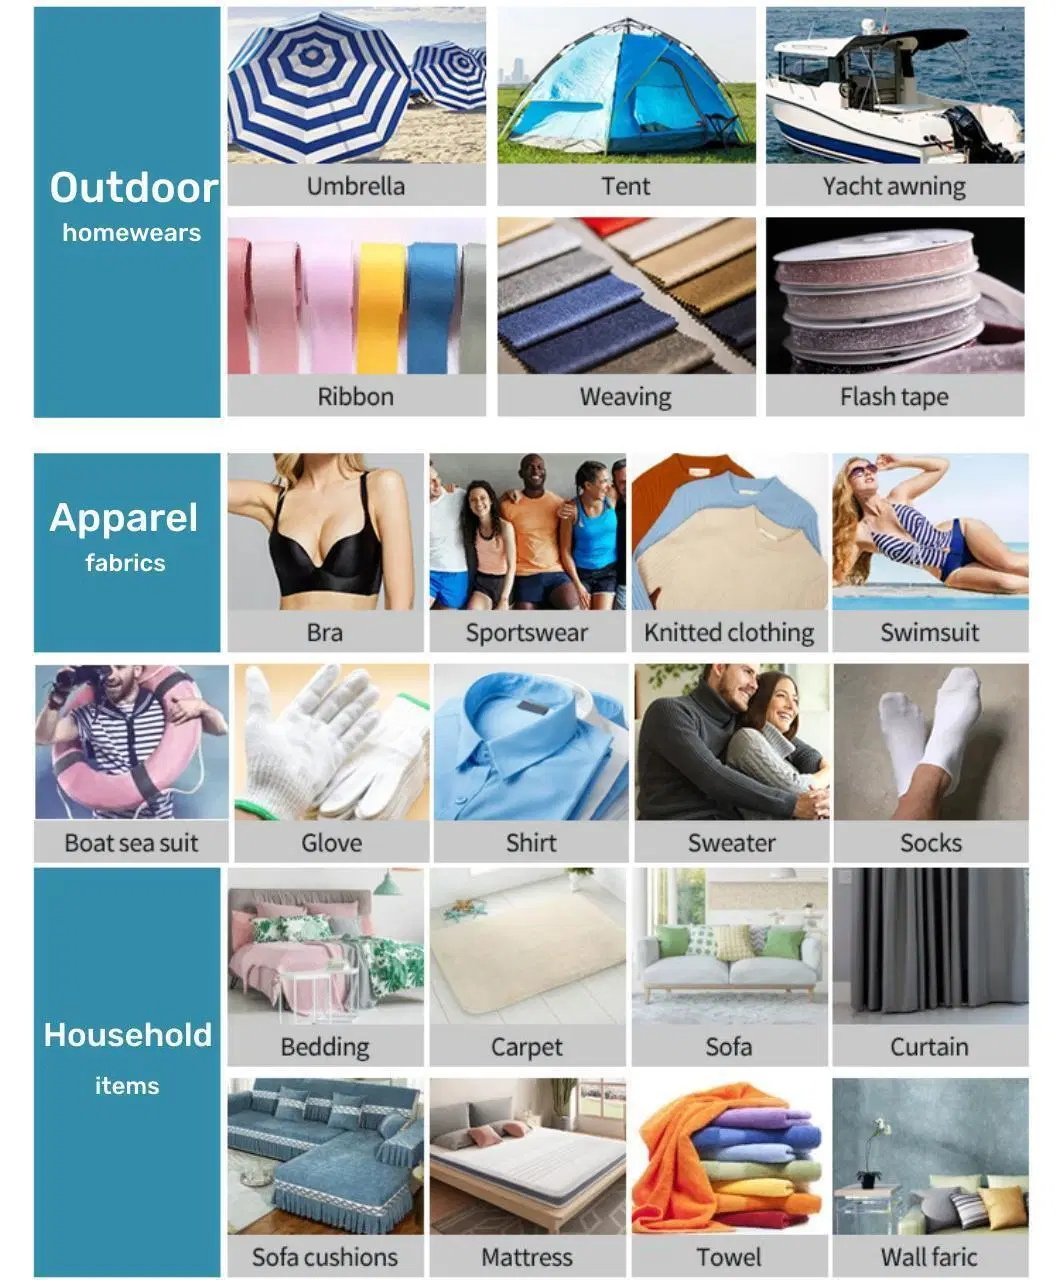 High Quality DTY 150d/48f Polyester Yarn 75D/2 Antibacterial Functional DTY Waterproof Yarn